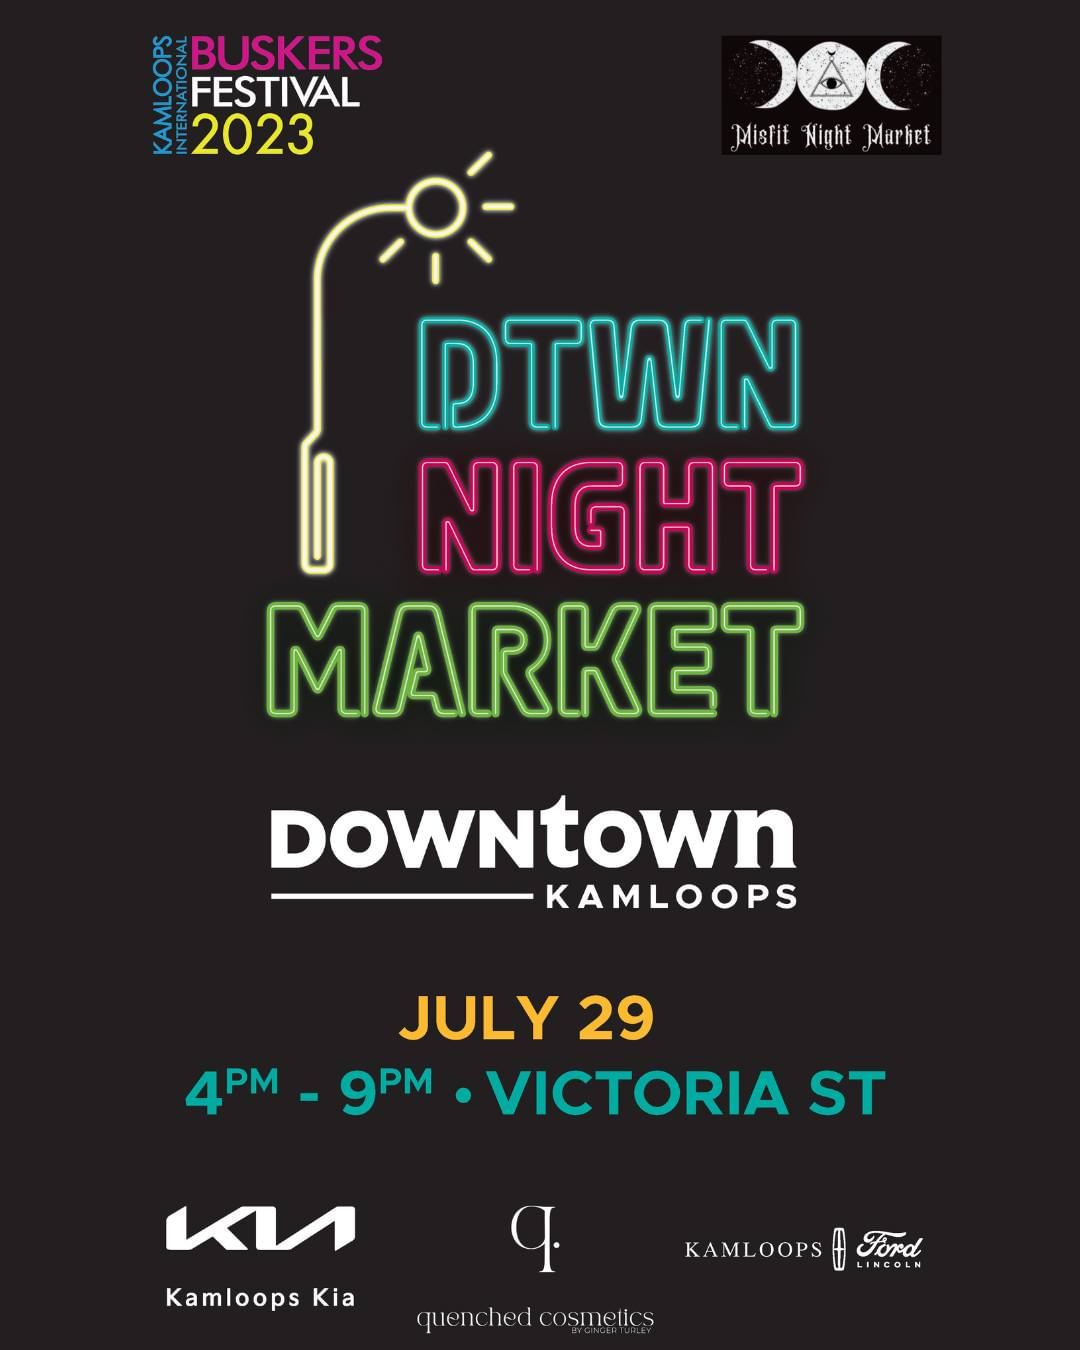 Night Market — Saturday July 27